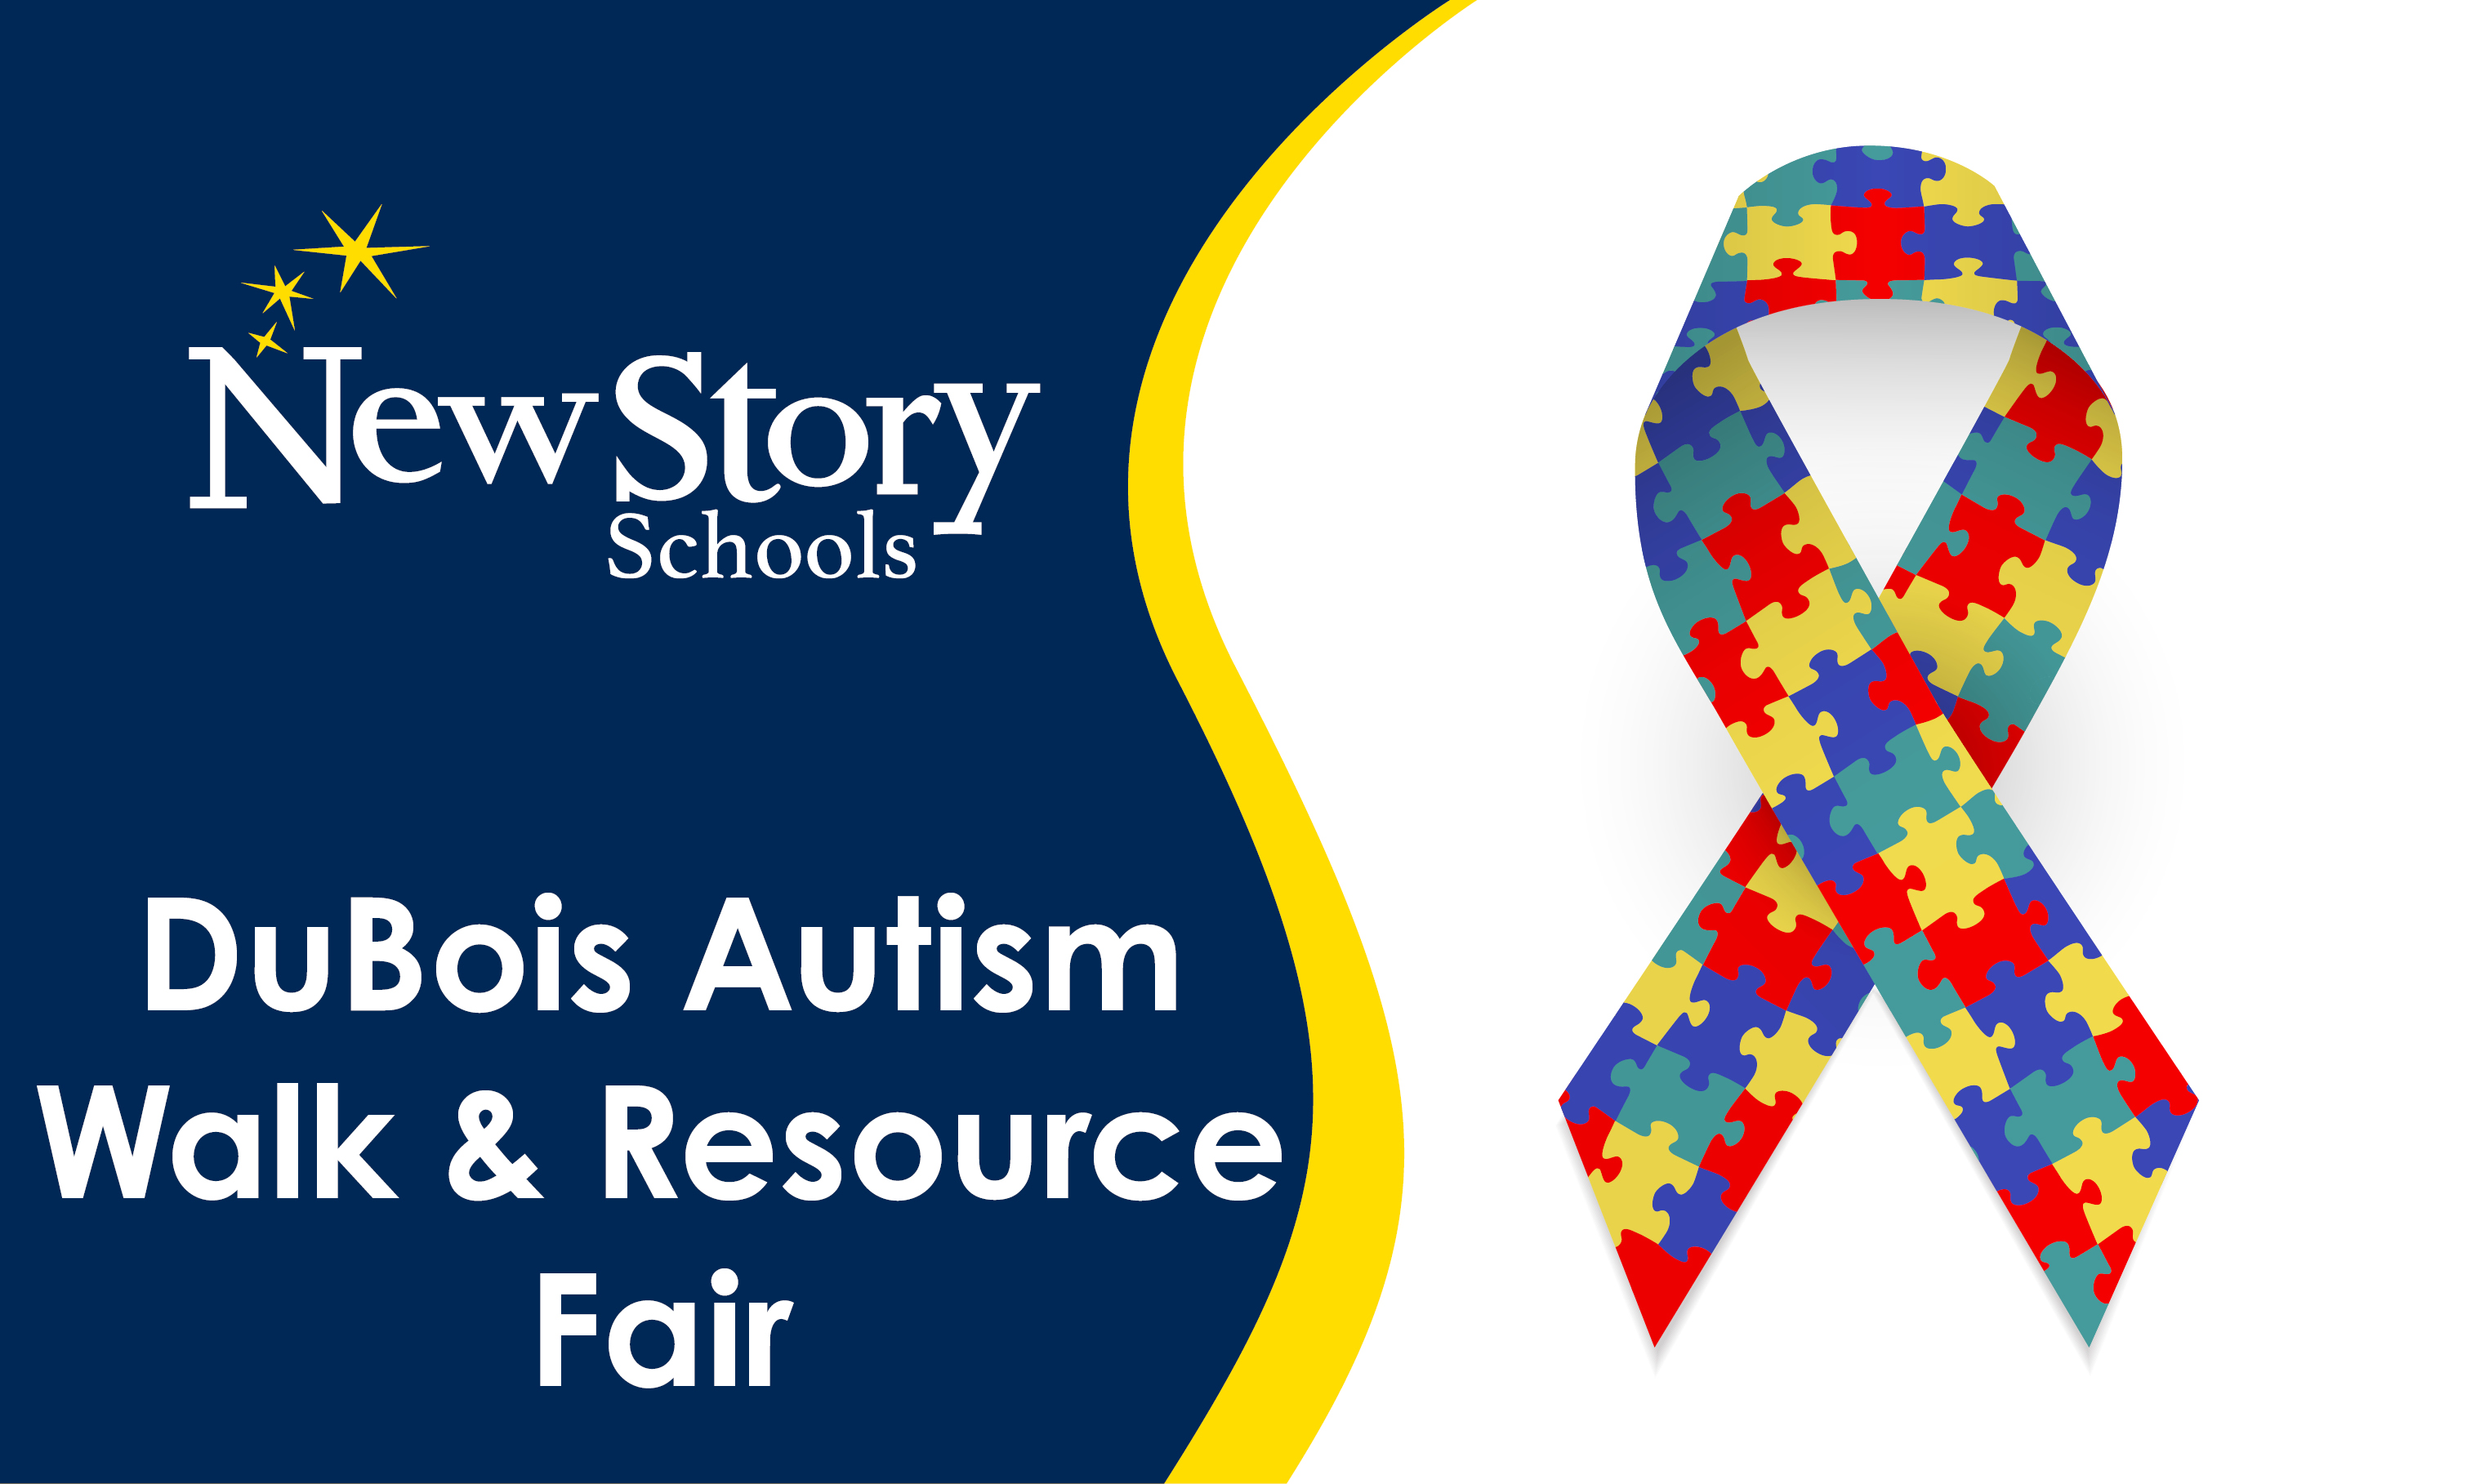 DuBois Autism Walk & Resource Fair